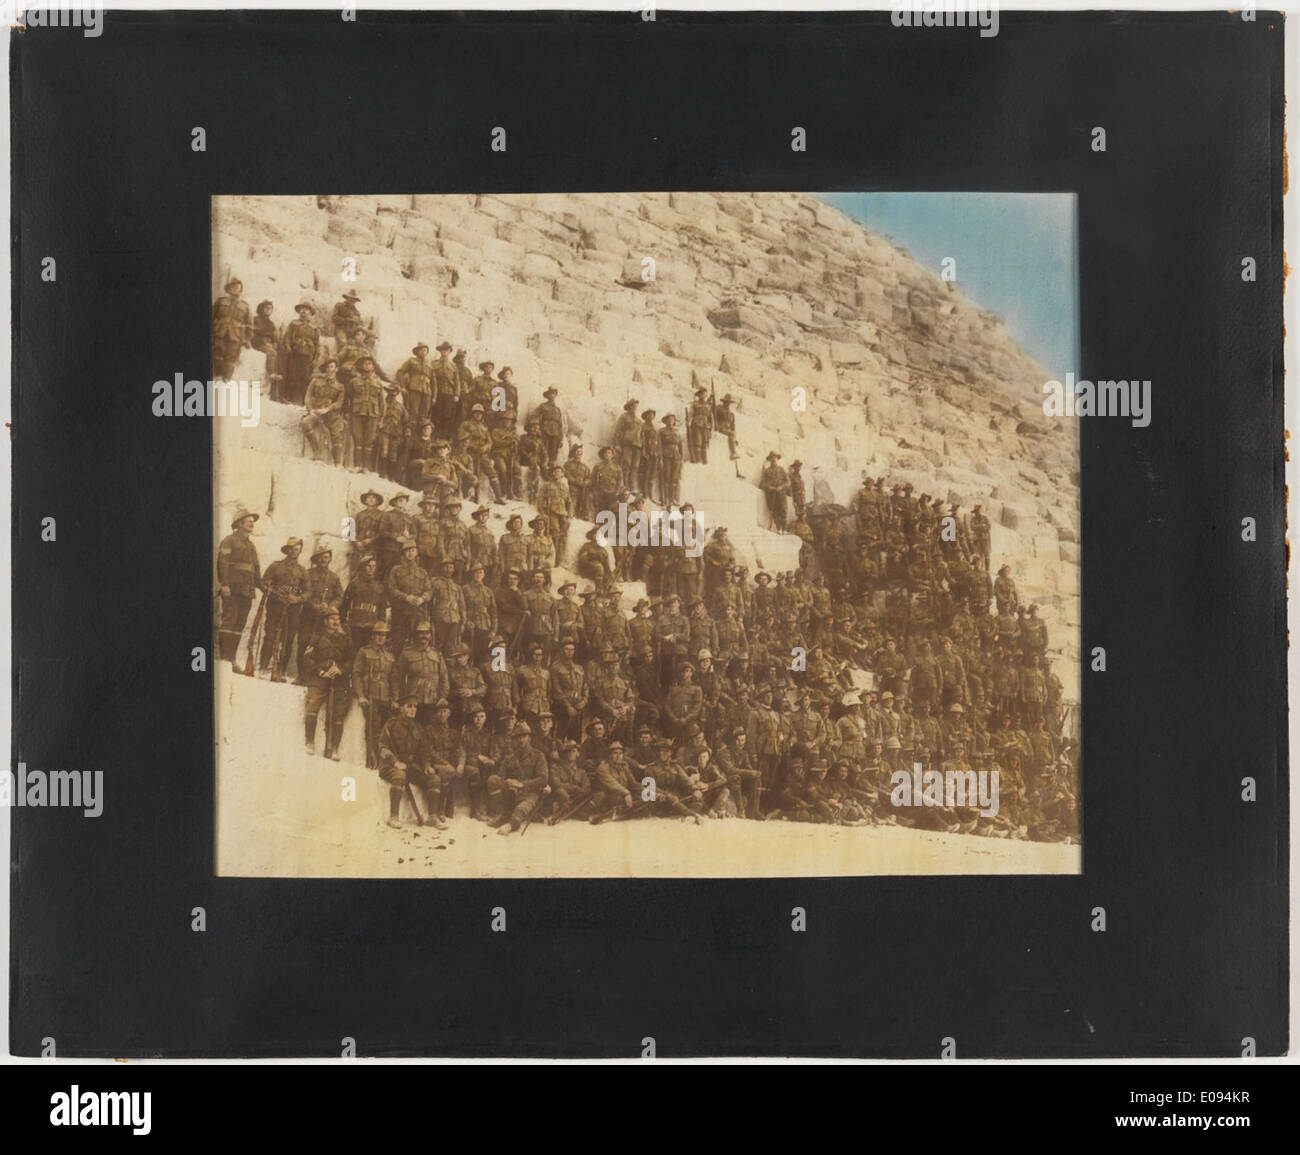 Las tropas australianas en la pirámide Foto de stock